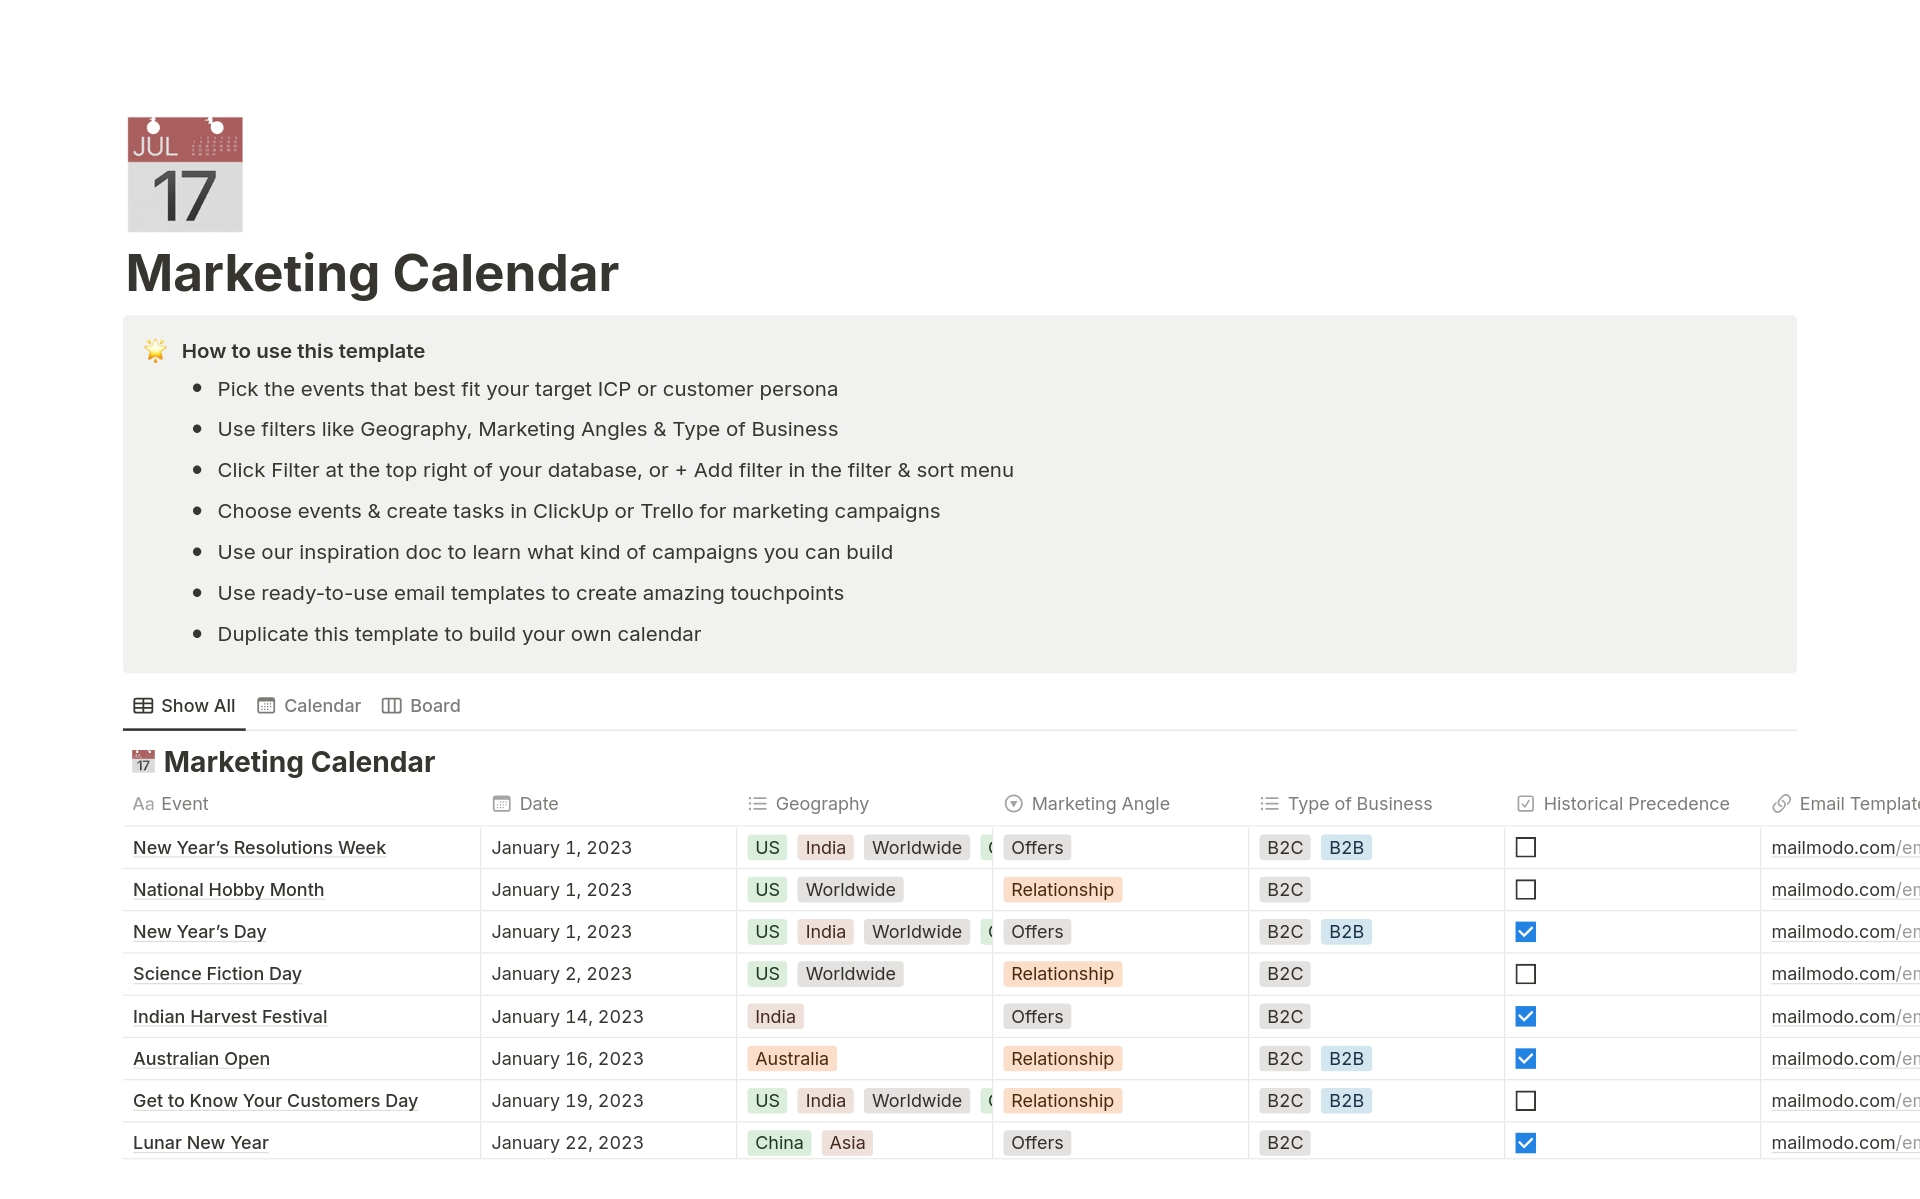 En forhåndsvisning av mal for Mailmodo's Marketing Calendar